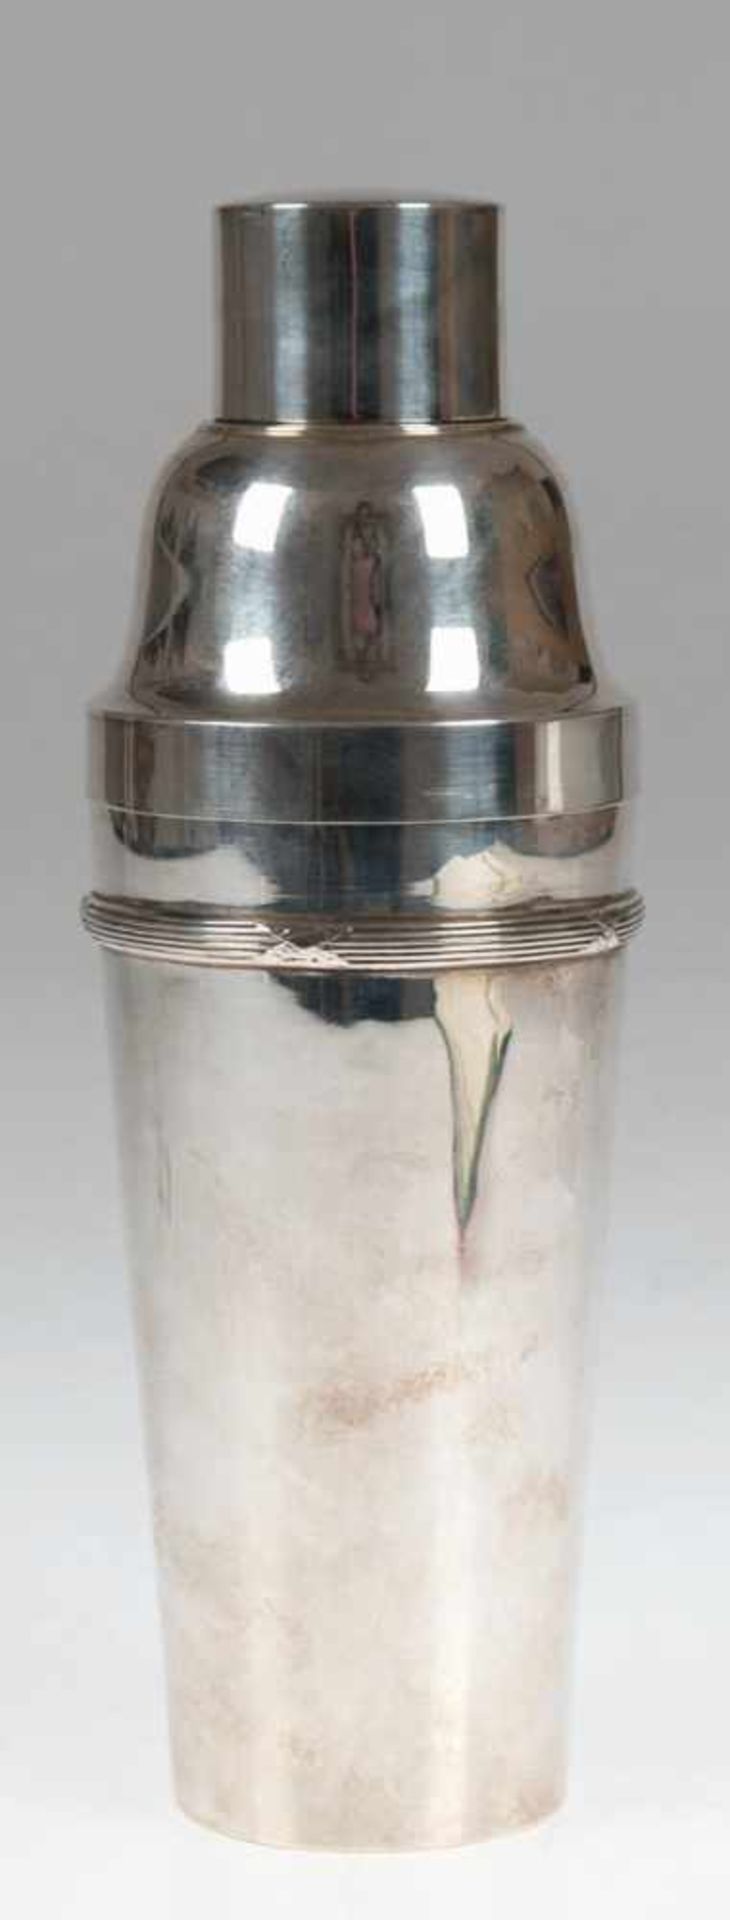 Cocktailshaker, 20er Jahre, deutsch, 800er Silber, punziert, ca 379 g, Kreuzbandbordüre,innen